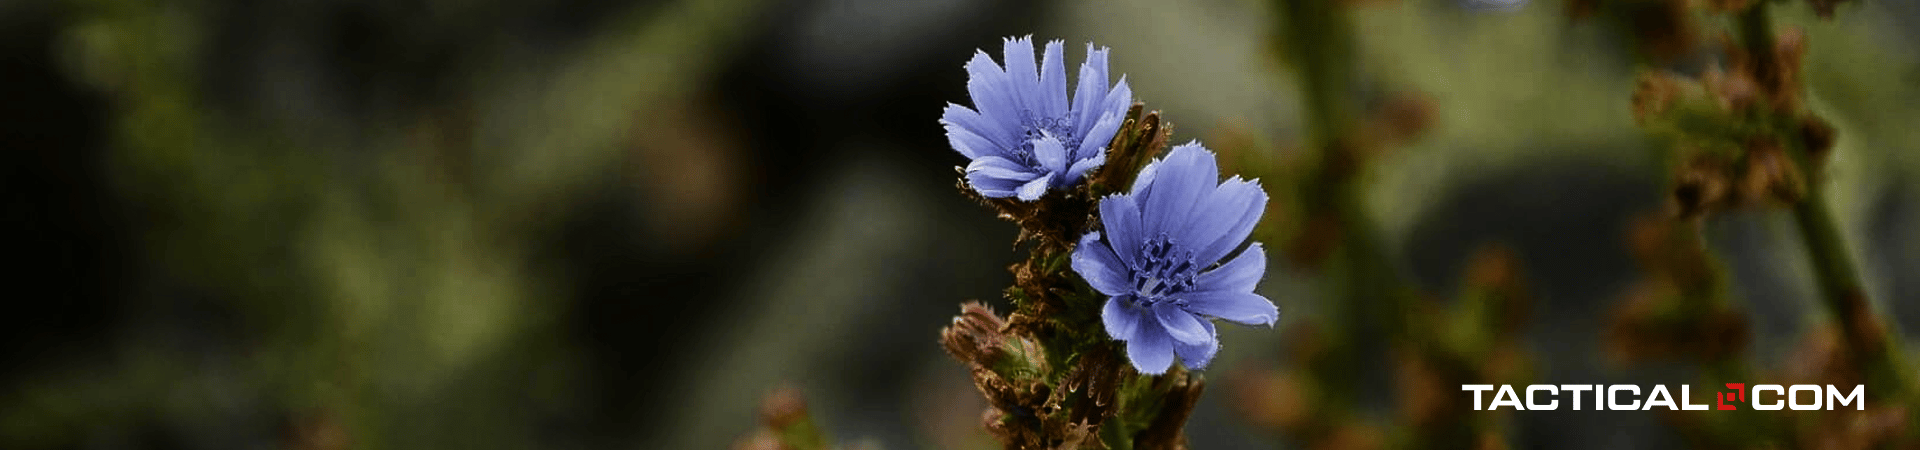 chicory flowers